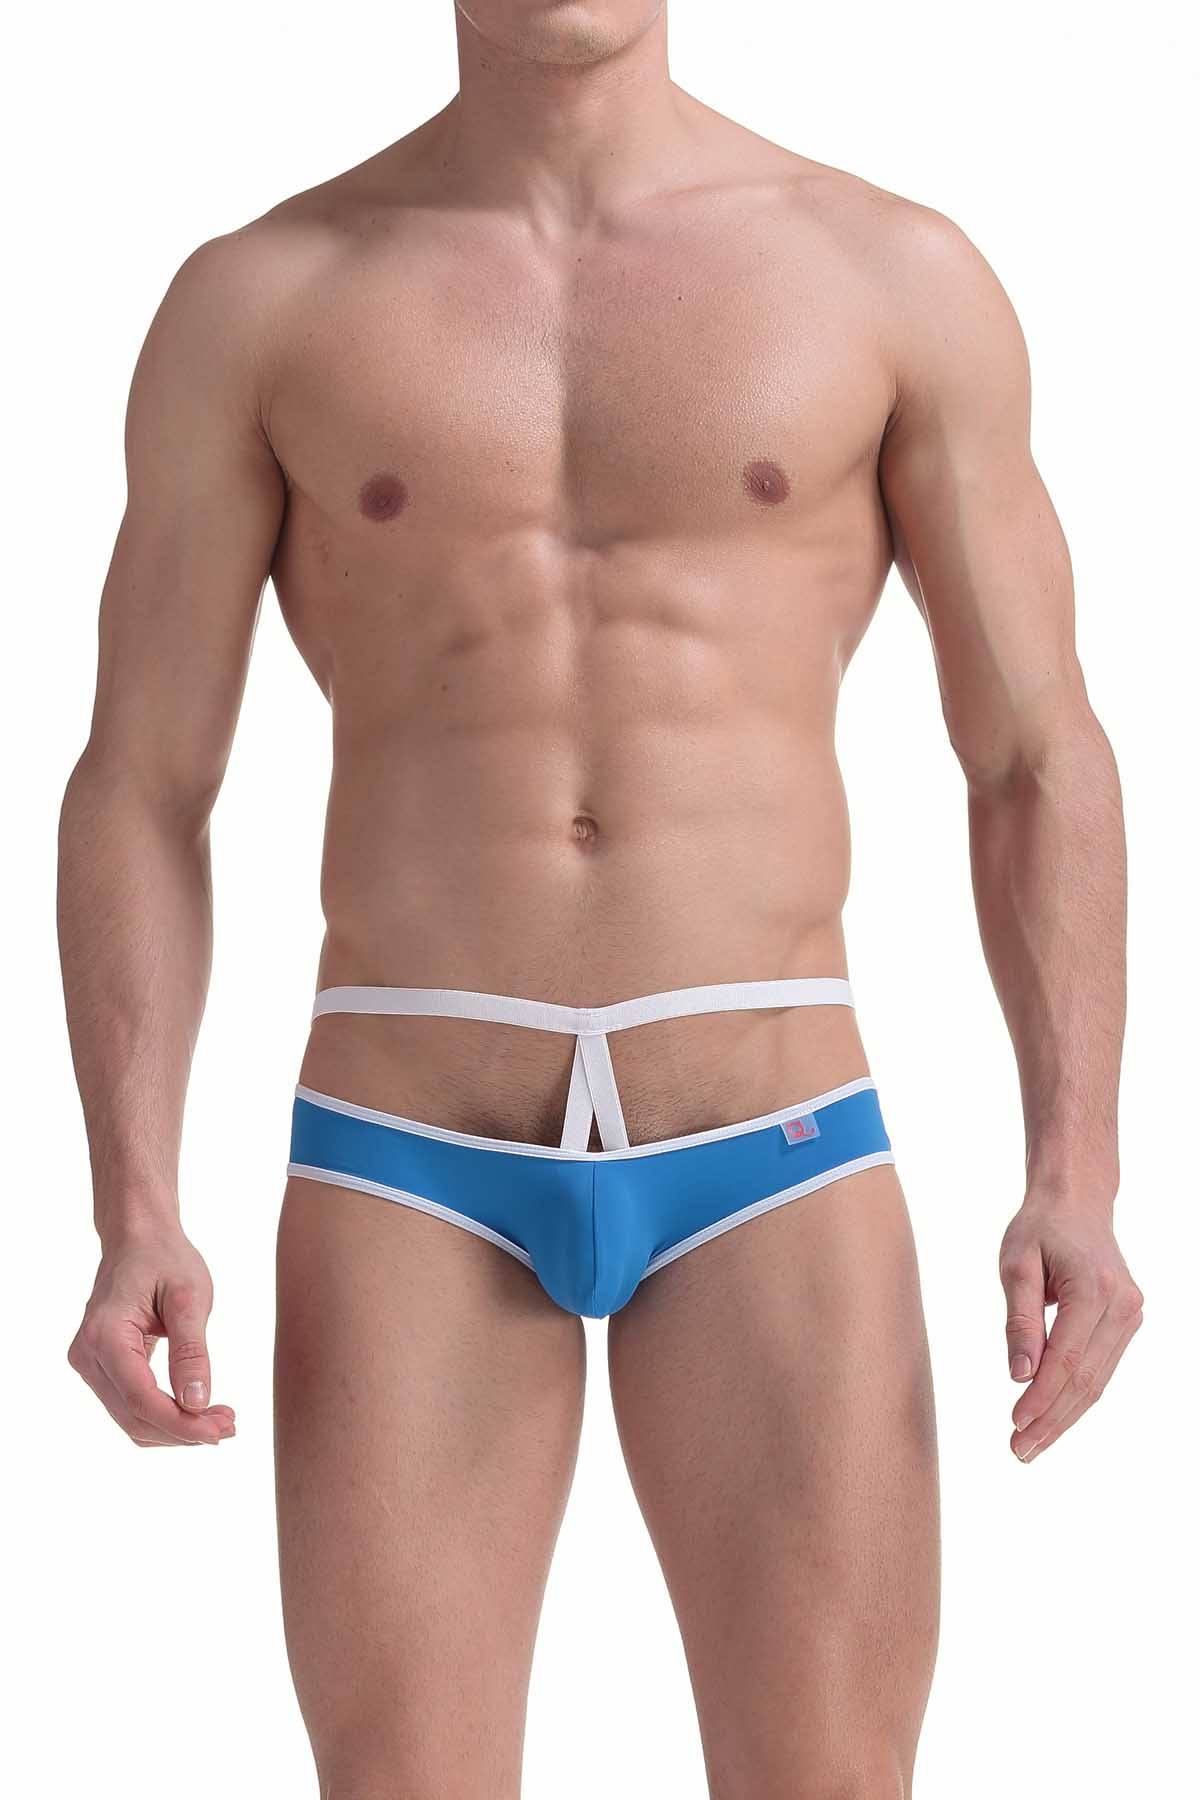 PetitQ Blue/White Bikini Thong